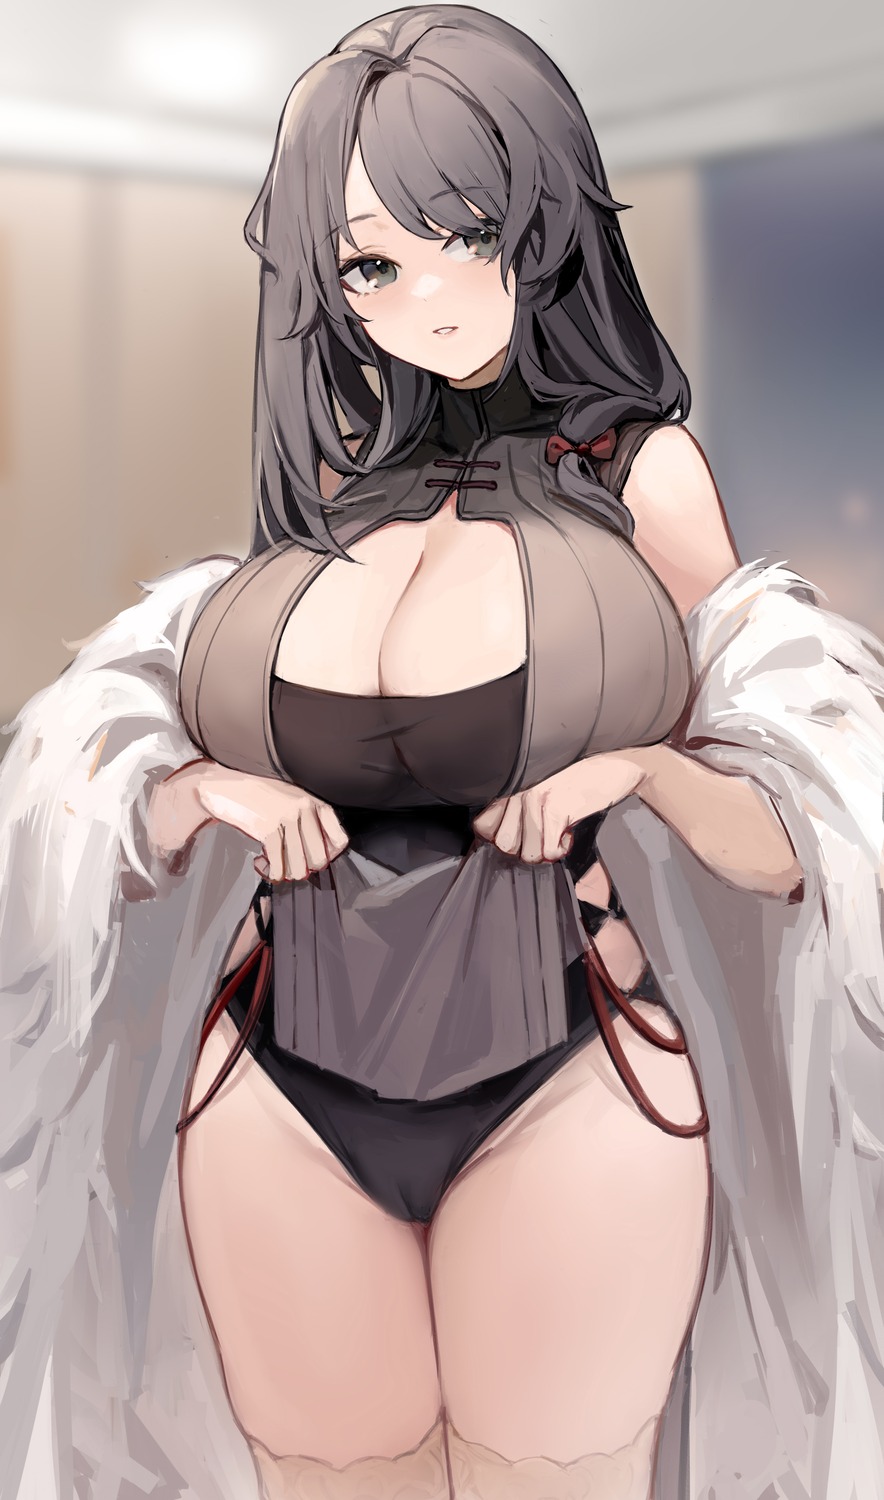 Anime girls with huge boobs